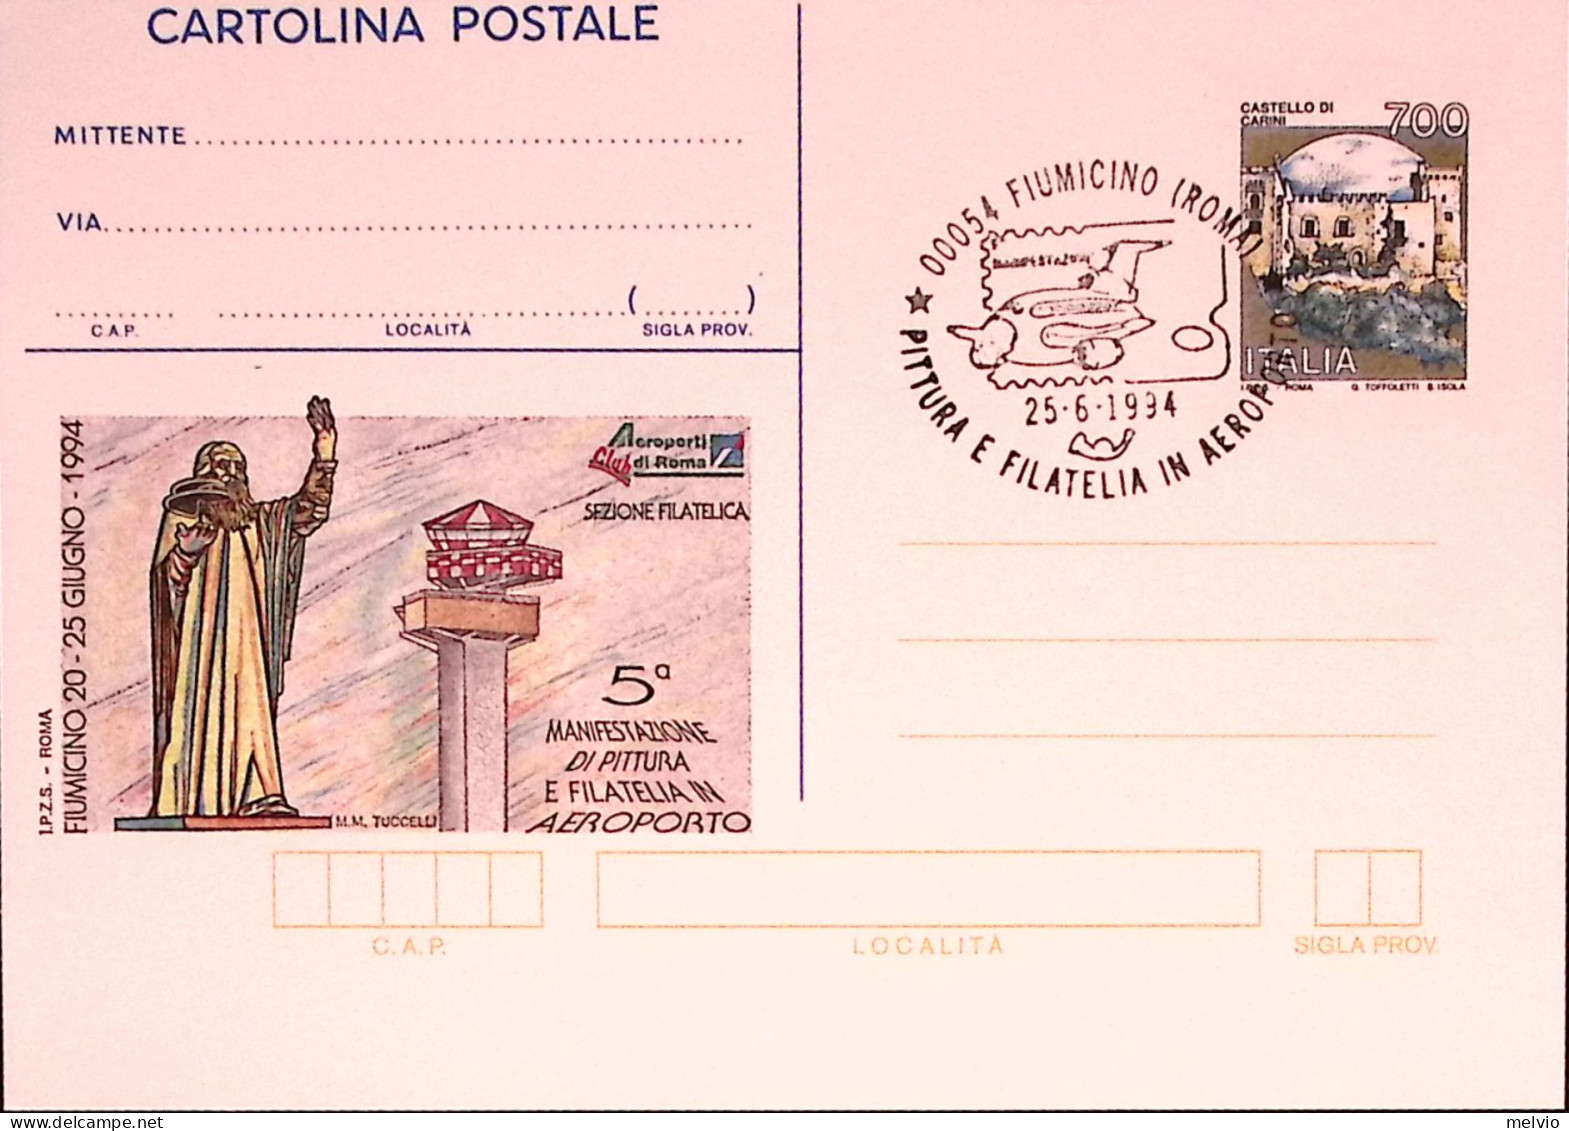 1994-ROMA AEROPORTO Cartolina Postale IPZS Lire 700 Con Ann Spec - Stamped Stationery